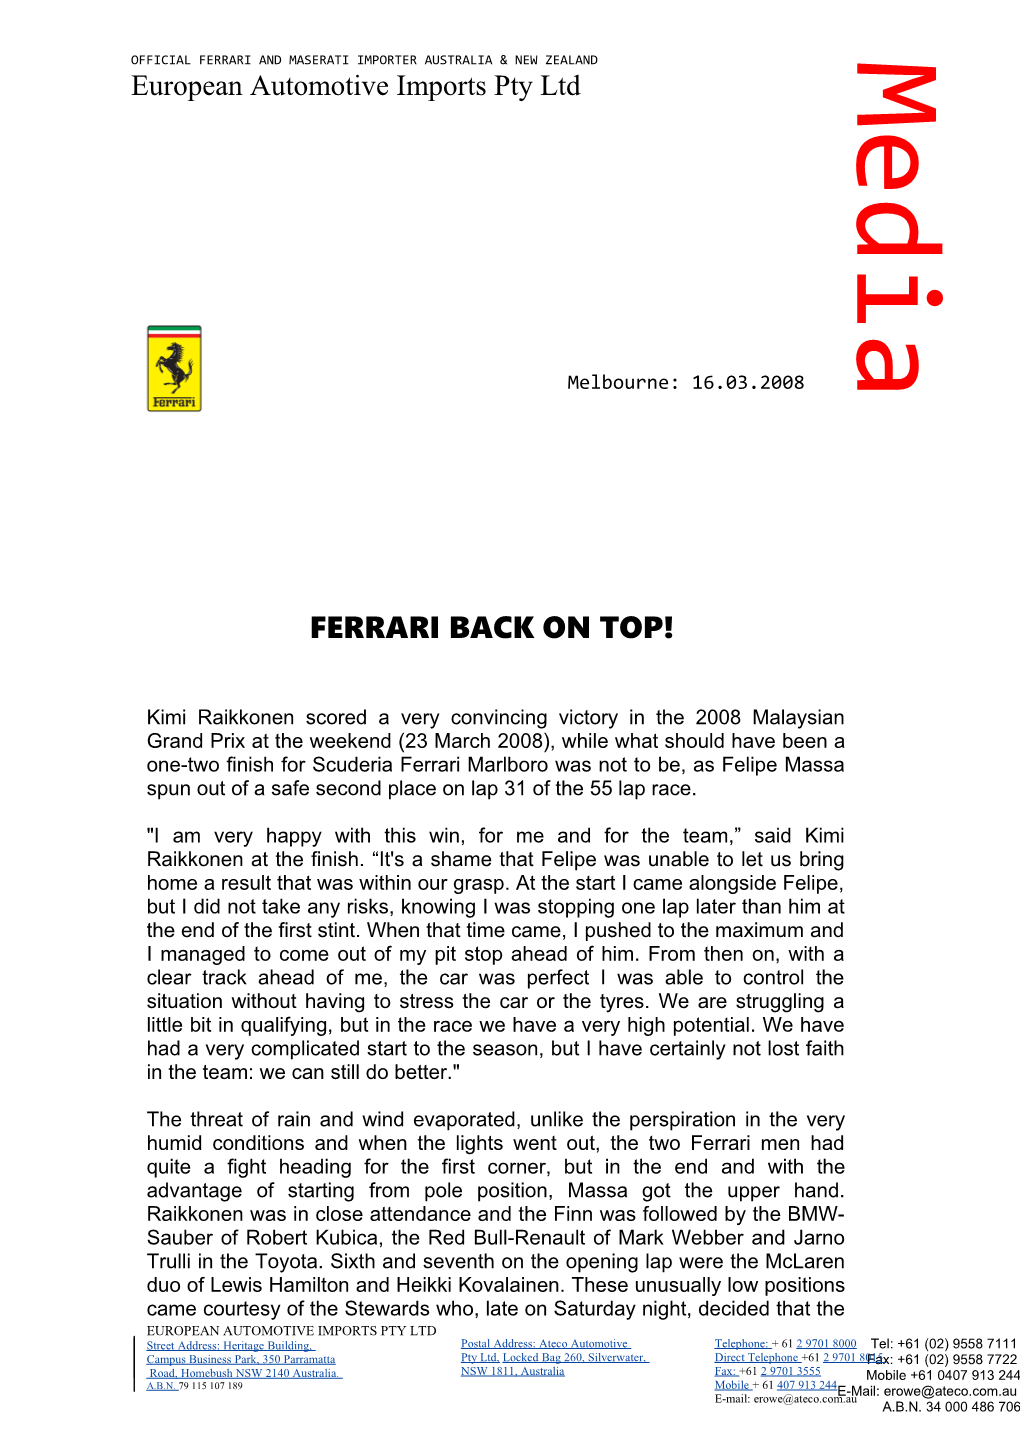 Ferrari Back on Top!